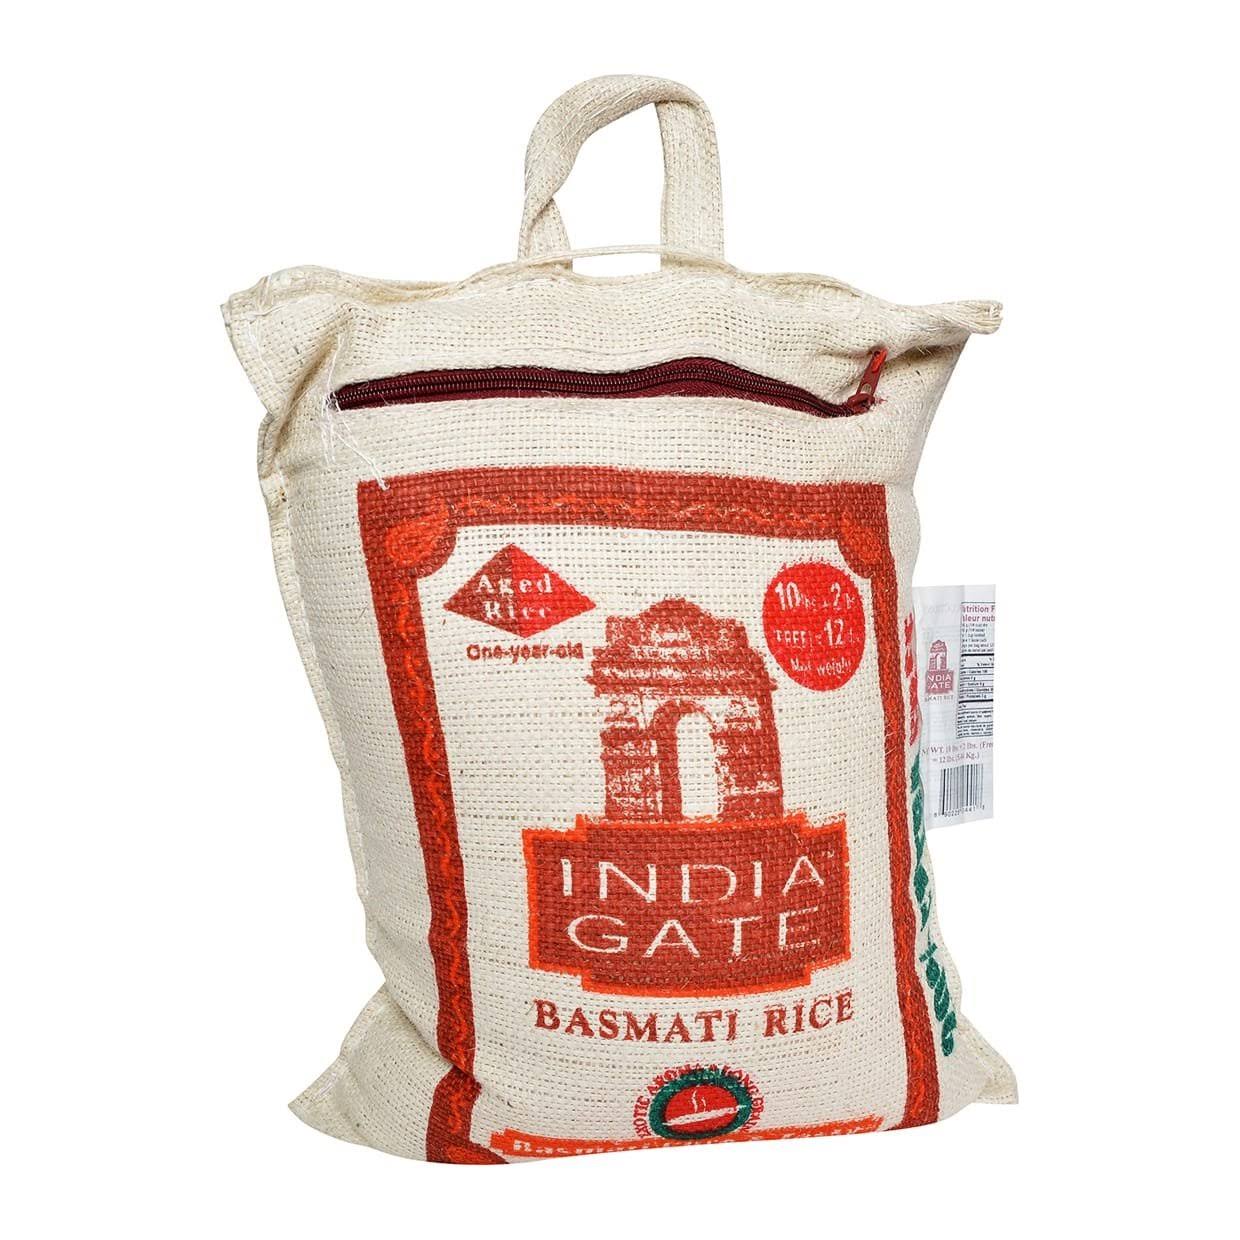 India Gate Basmati Rice, 10-pounds Bags